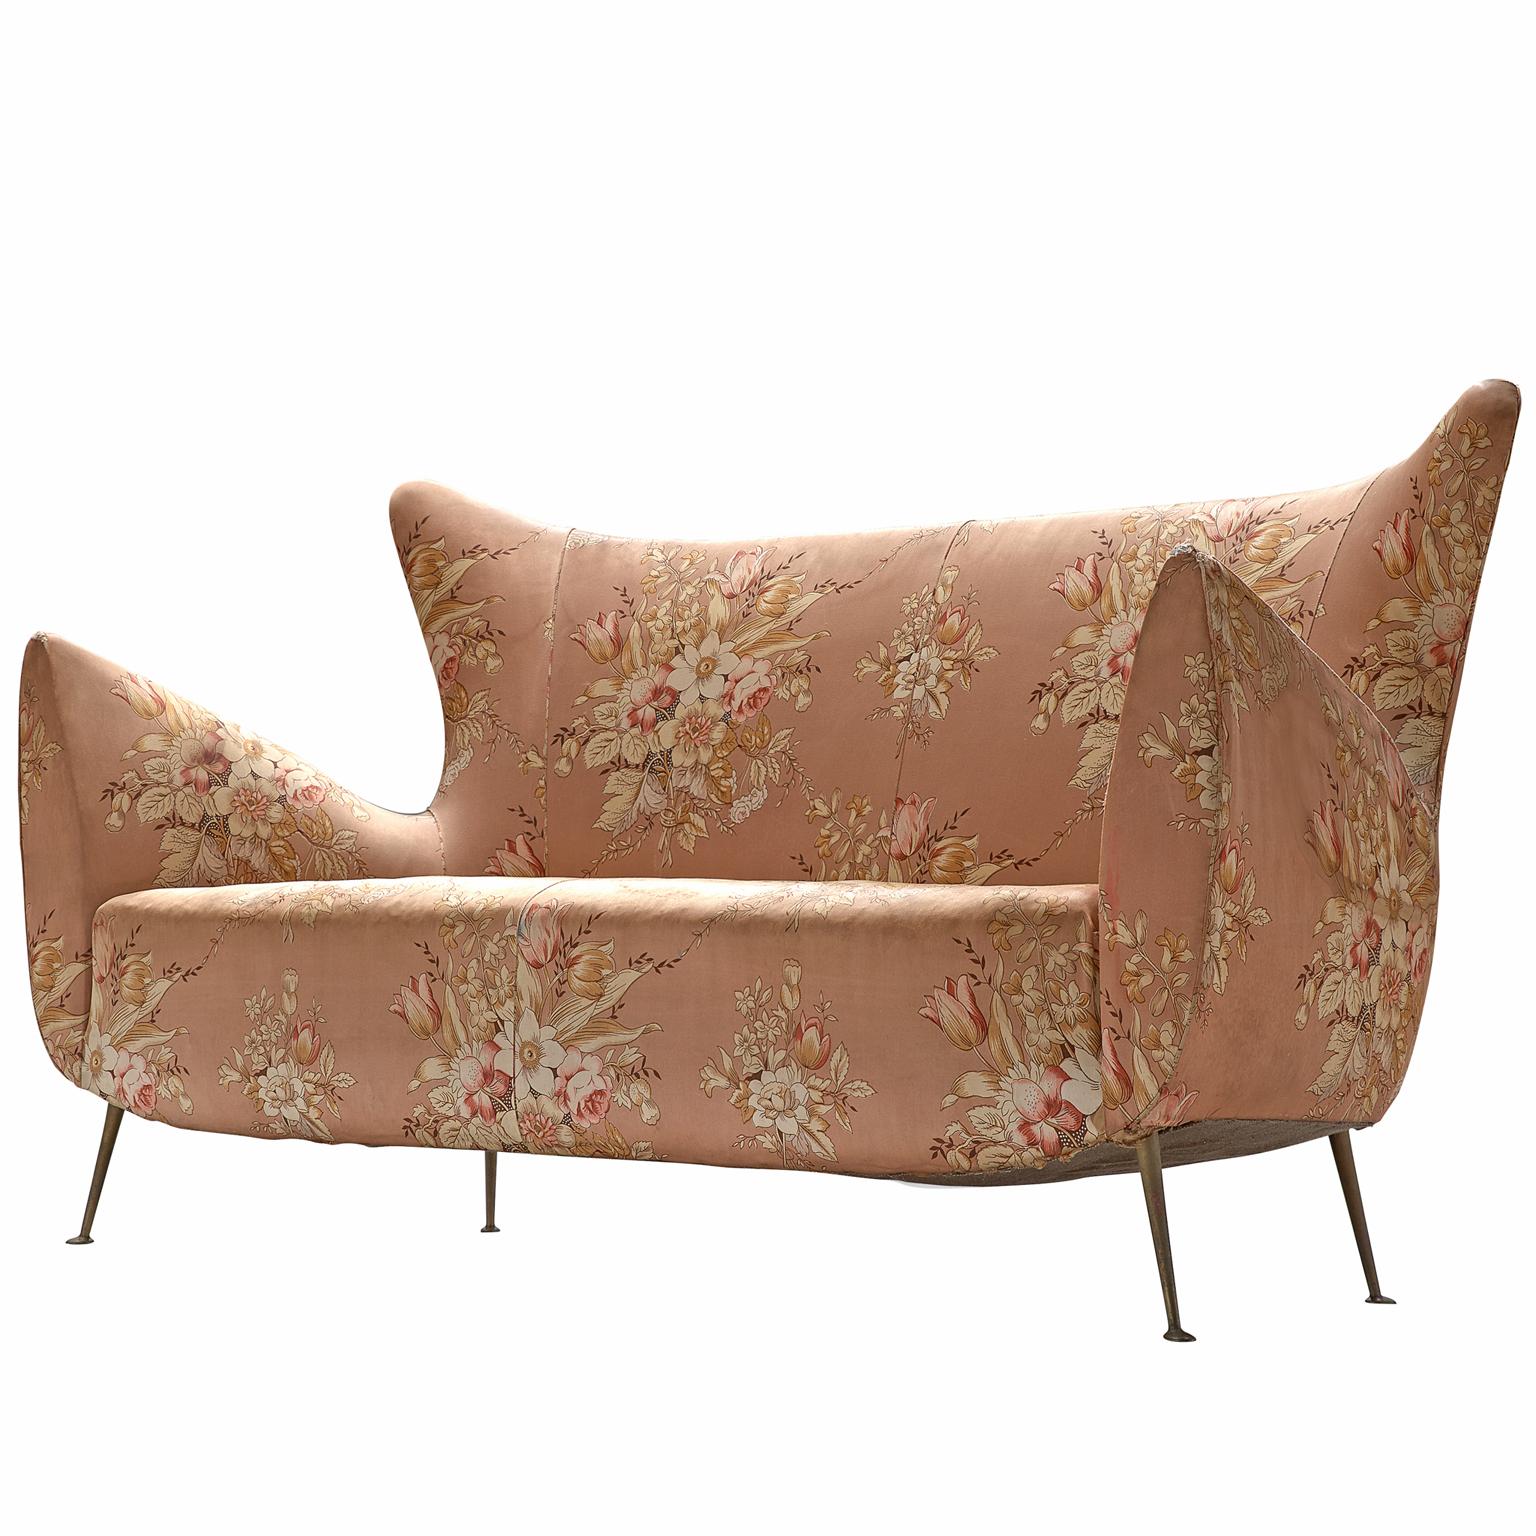 Elegant Italian Sofa in Pink Floral Upholstery